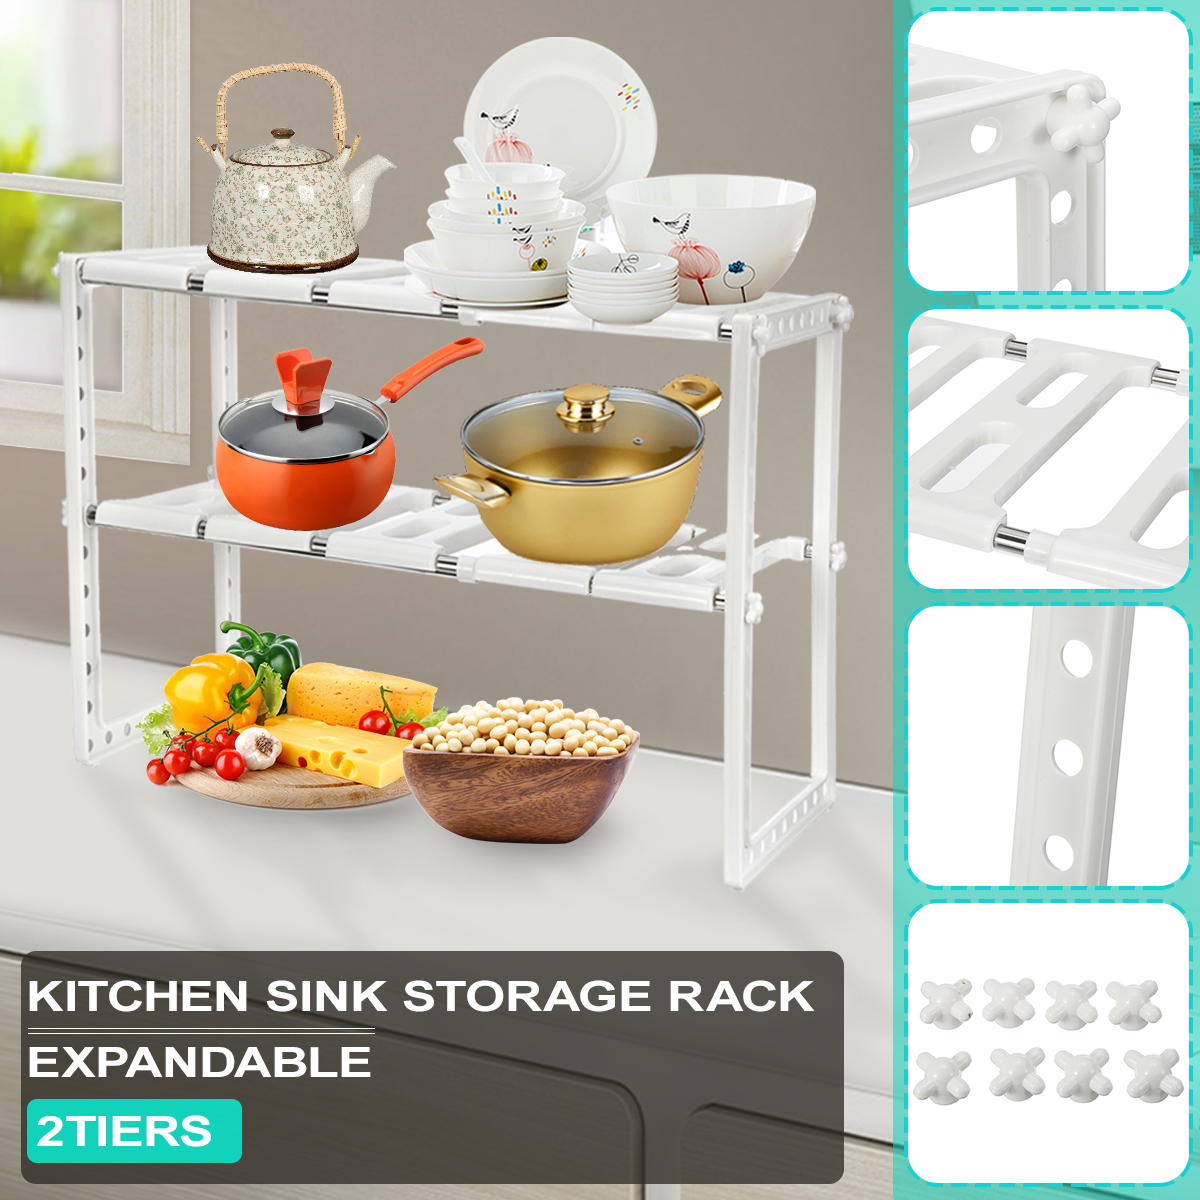 Expandable-Kitchen-Storage-Shelf-Bathroom-Shoe-Houseplant-Organizer-Rack-Holder-1628516-1